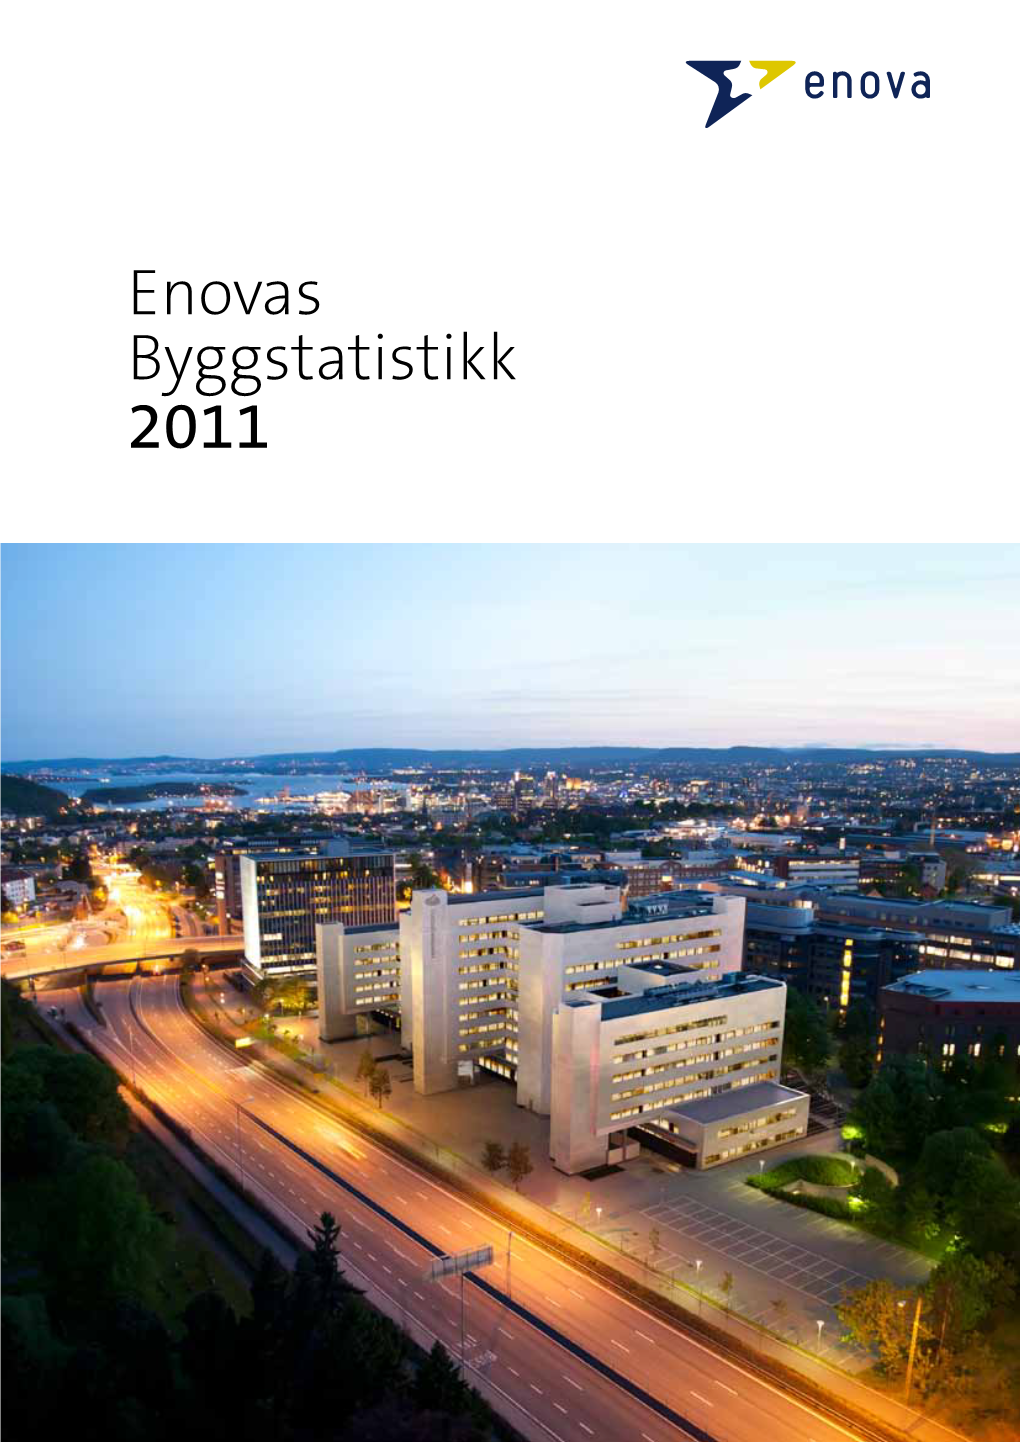 Enovas Byggstatistikk 2011 7239 MB